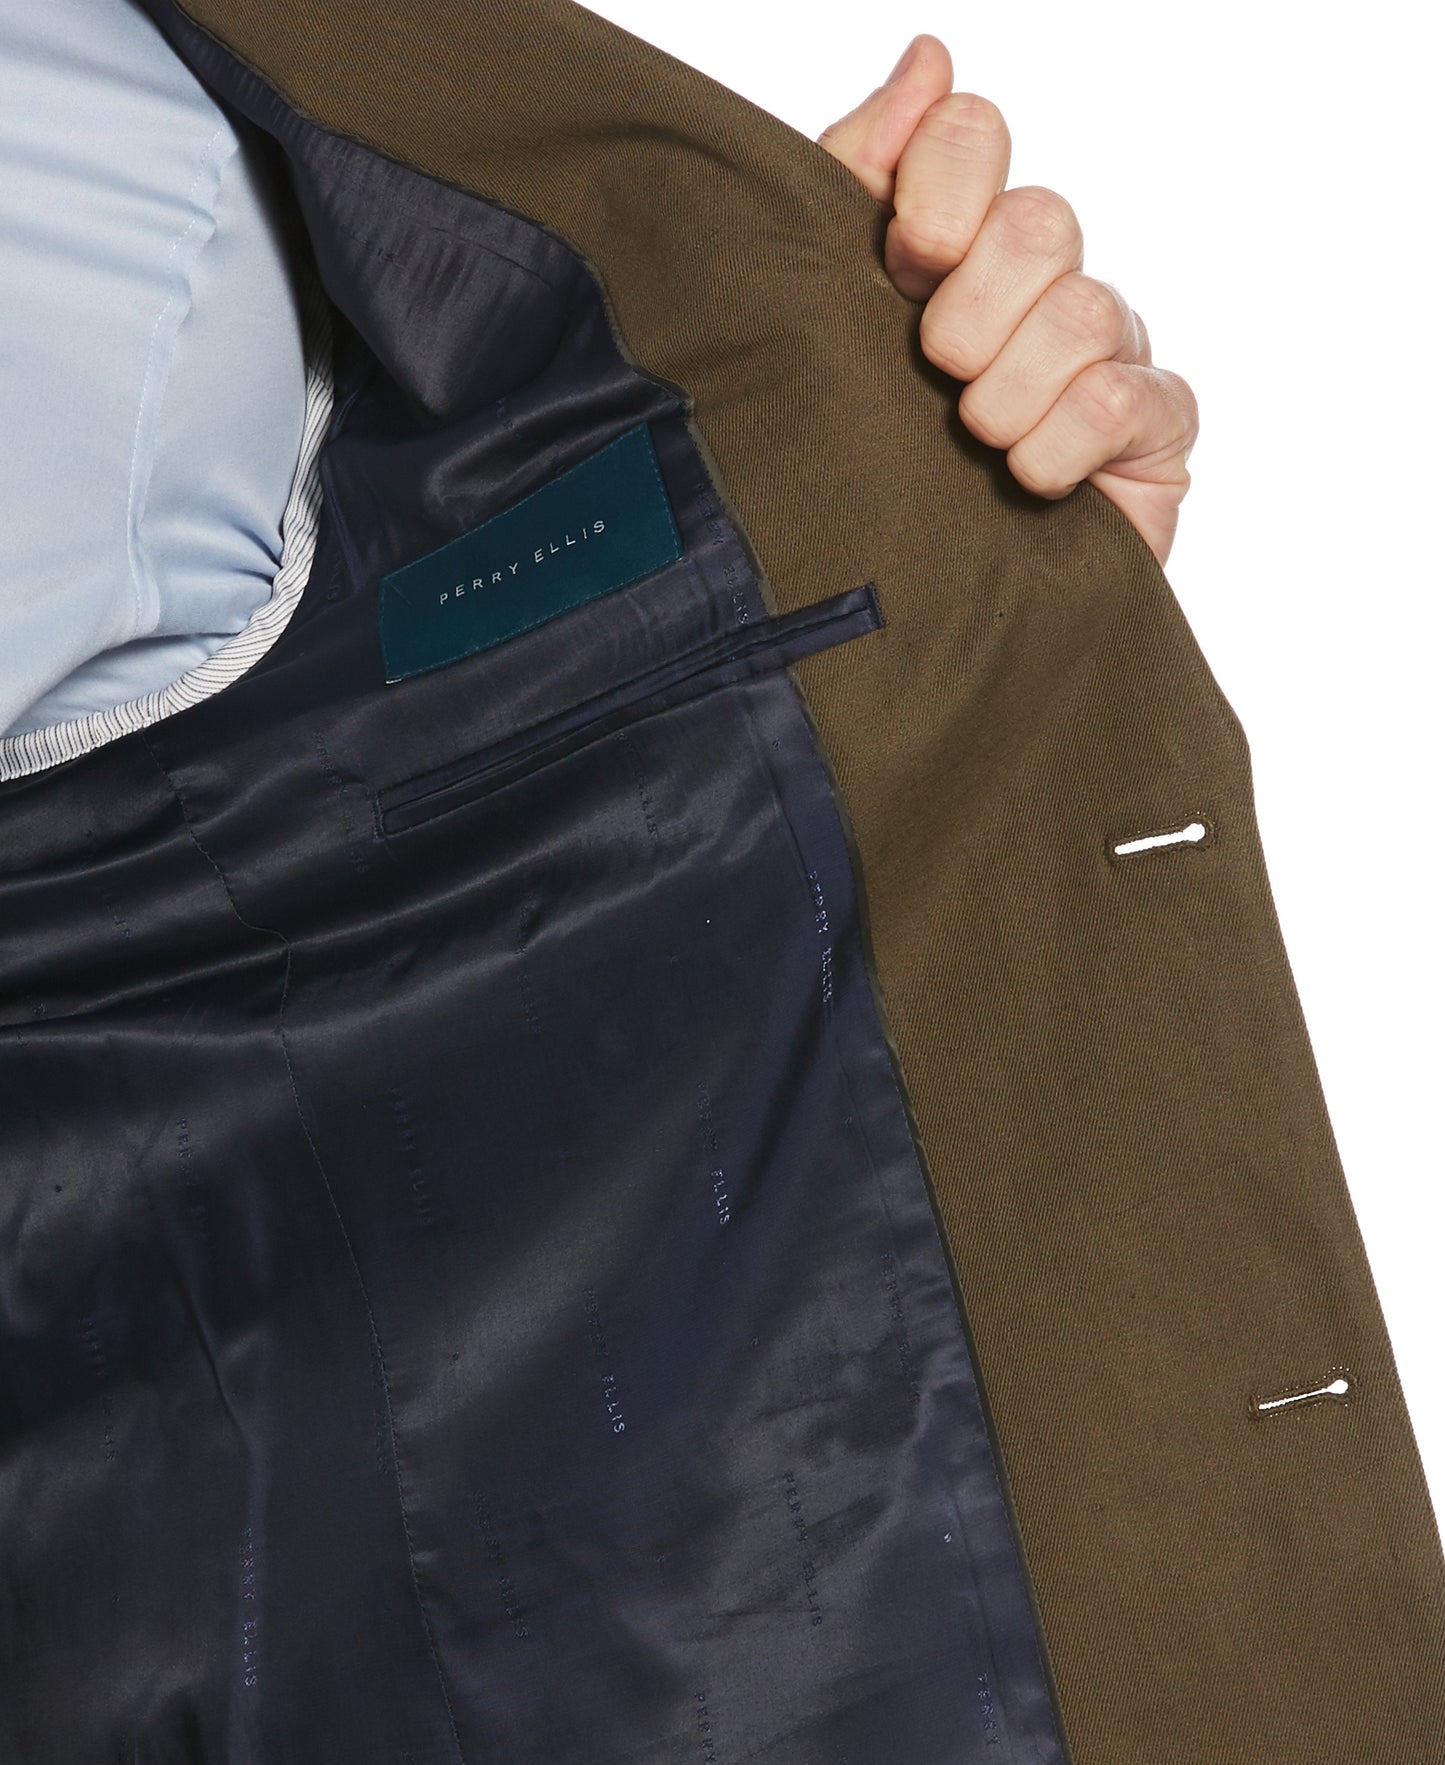 Slim Fit Linen Blend Solid Stretch Suit Jacket